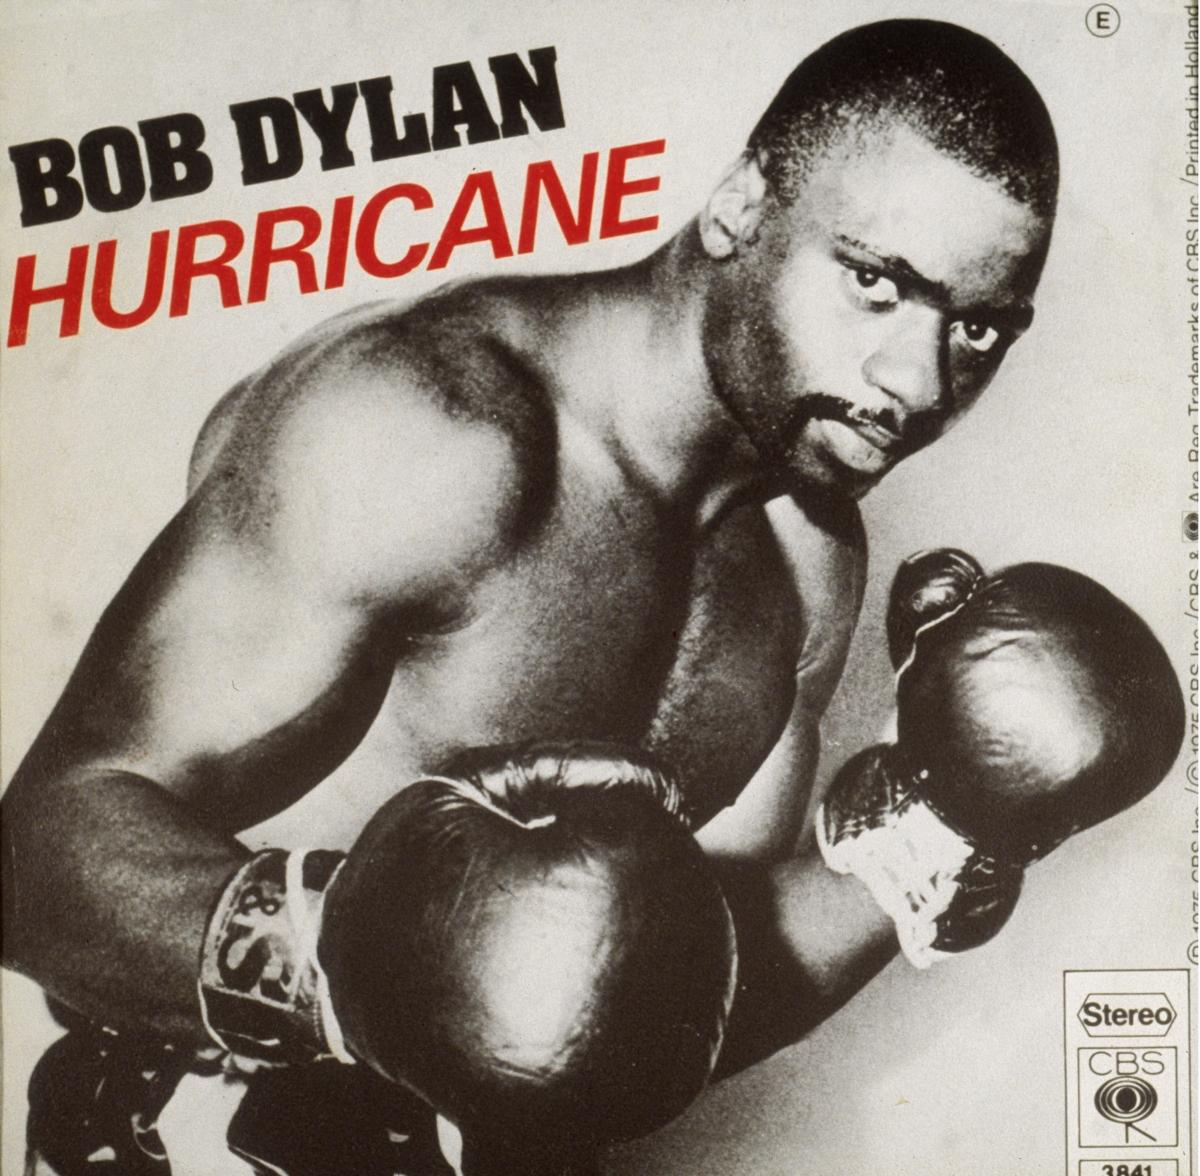 The 30 Greatest Bob Dylan Songs: #21 “Hurricane”